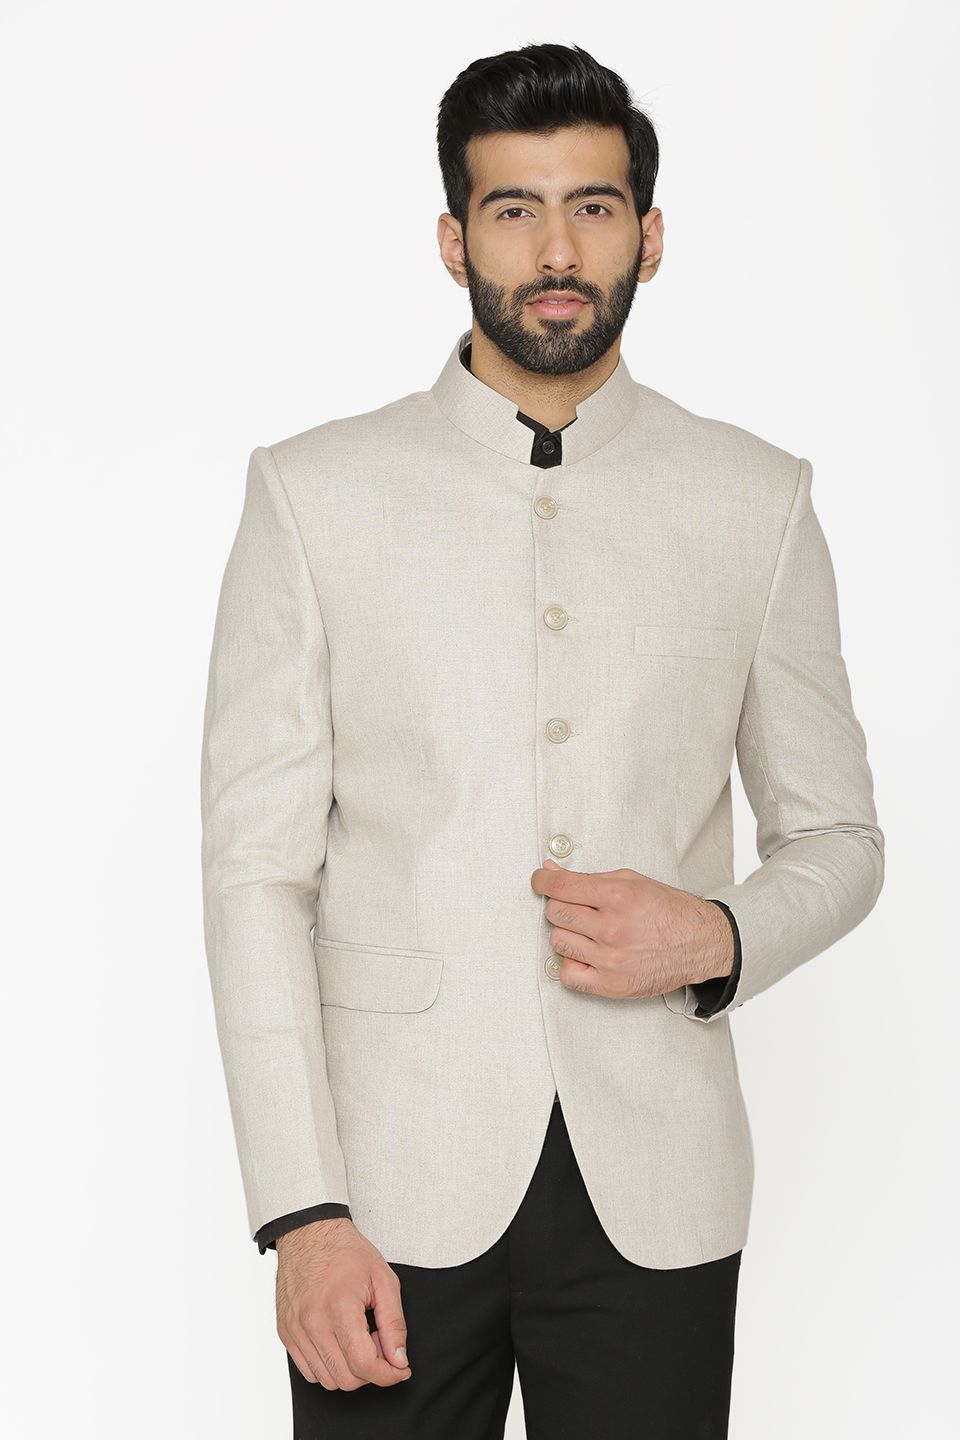 100% Linen White Blazer Coat Jacket